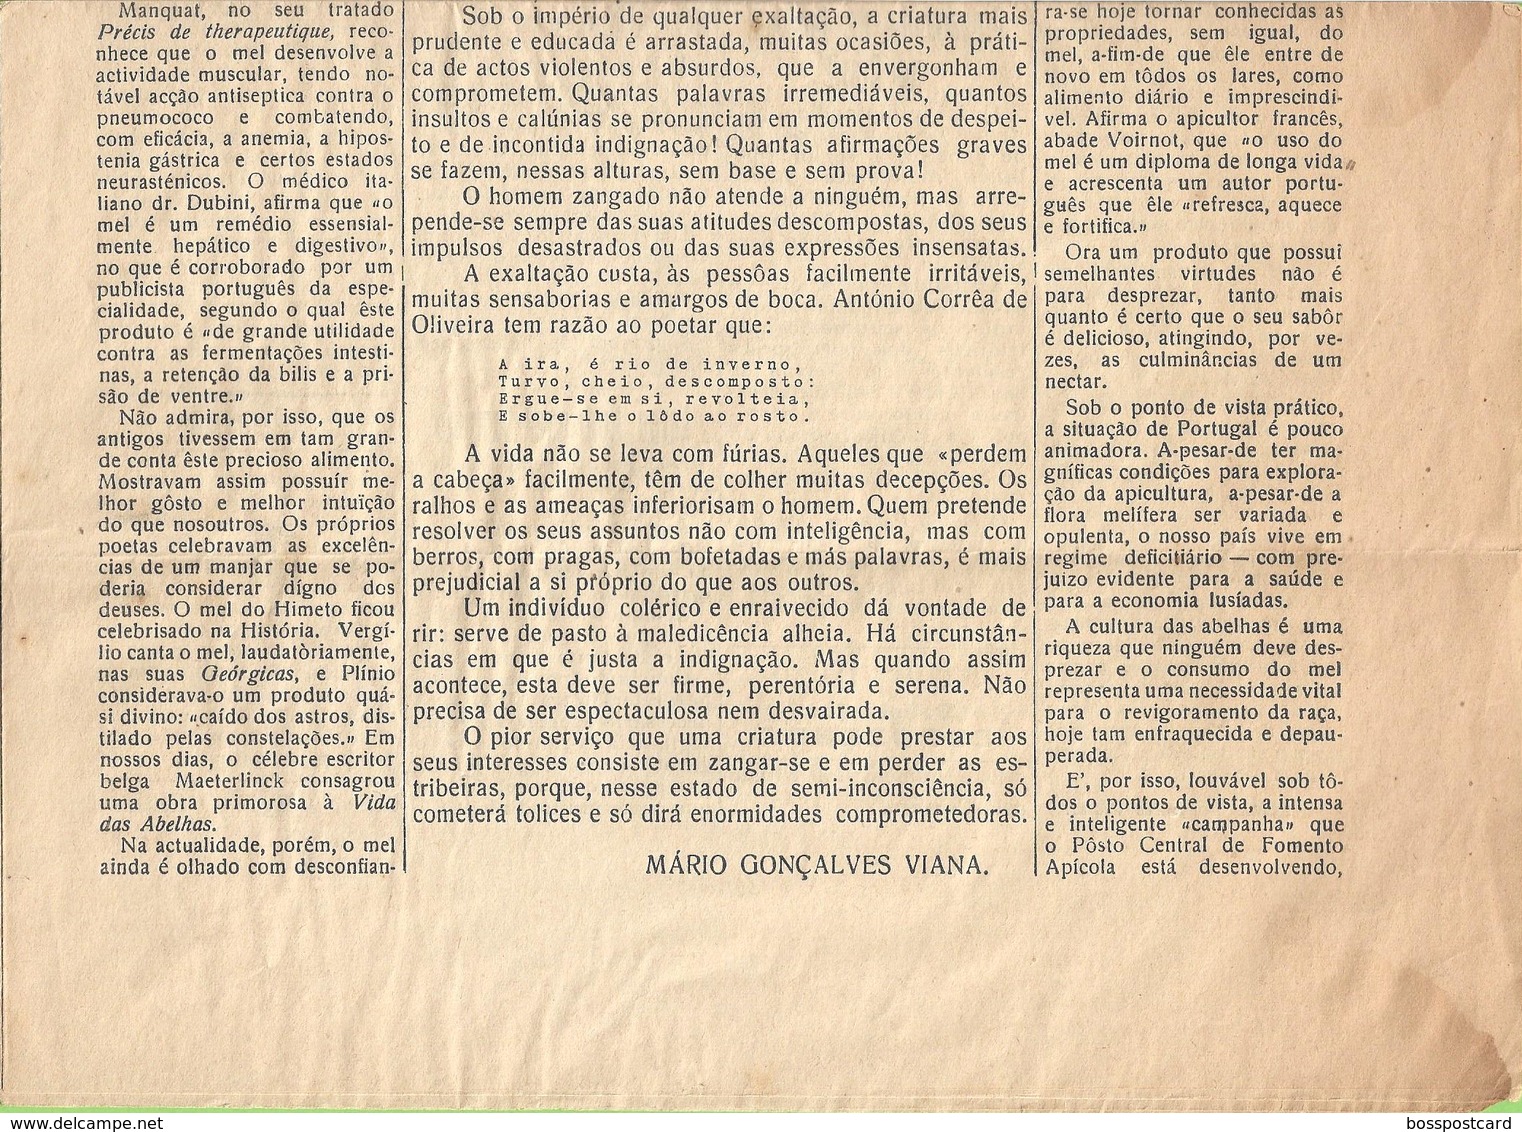 Esposende - Jornal O Cávado Nº 784 De 12 De Maio De 1935. Braga. - Testi Generali